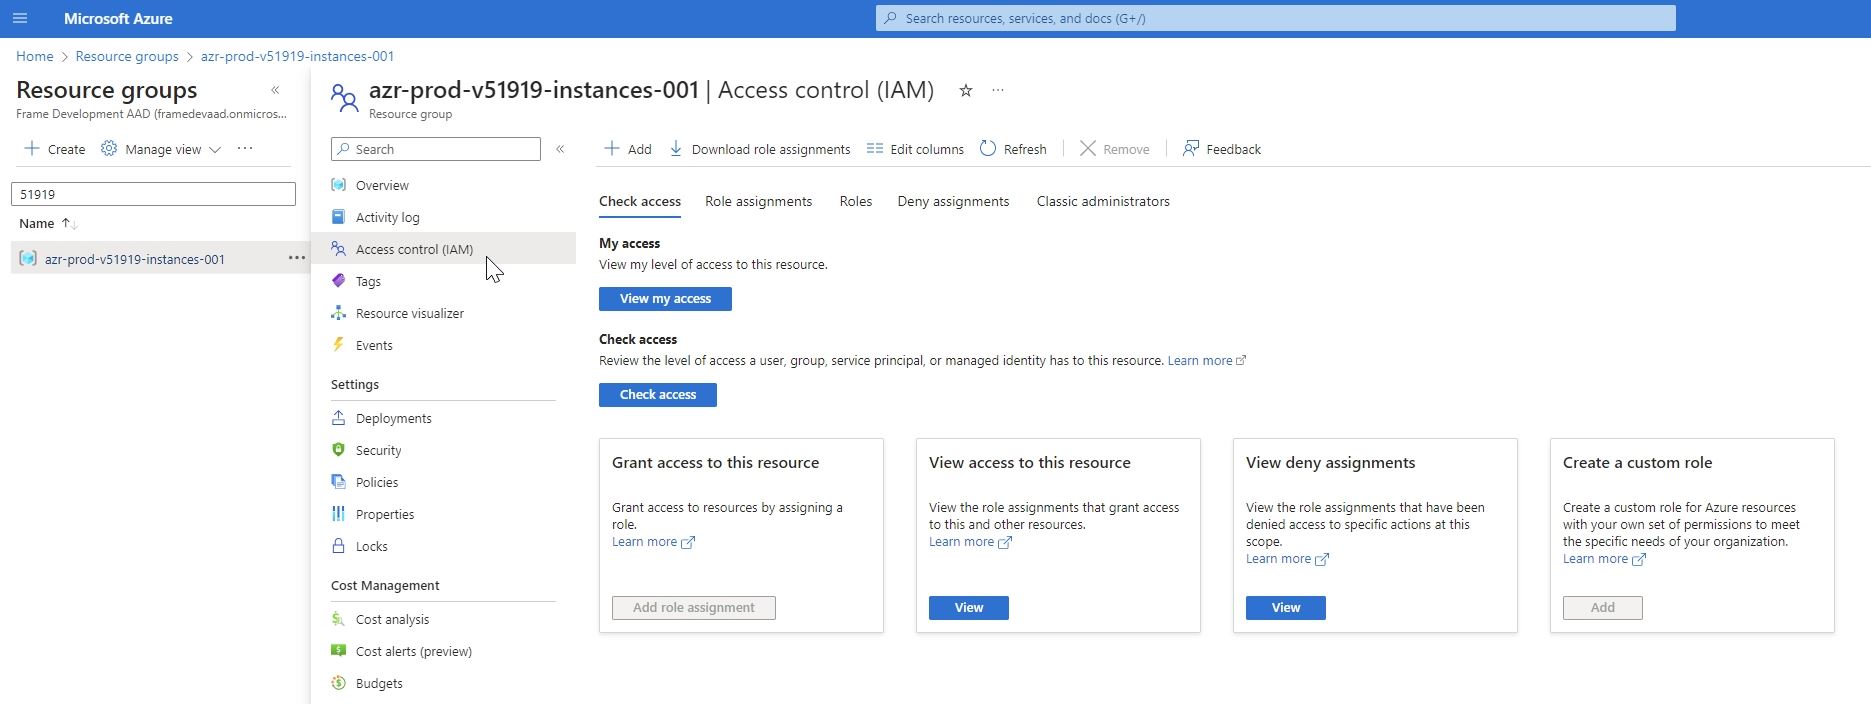 Azure Portal - Resource Groups - Access Control (IAM)